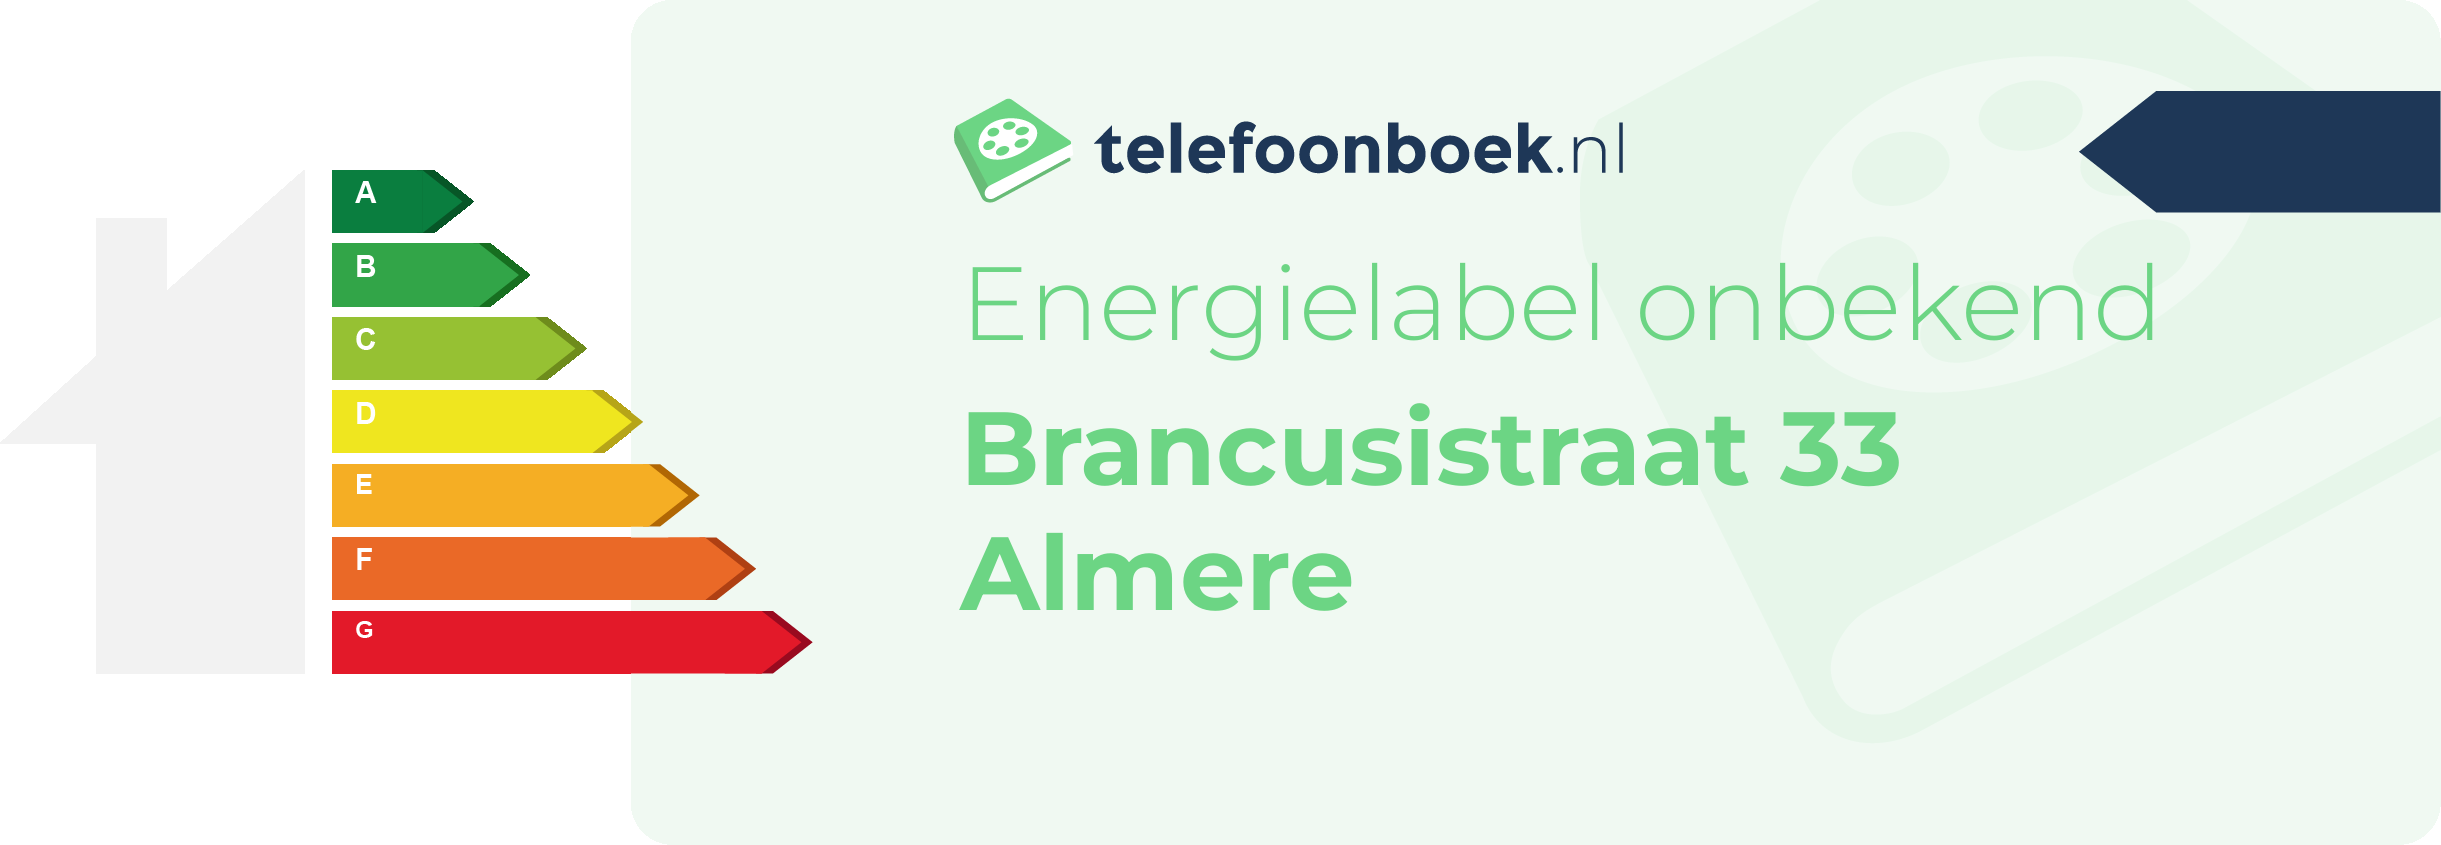 Energielabel Brancusistraat 33 Almere